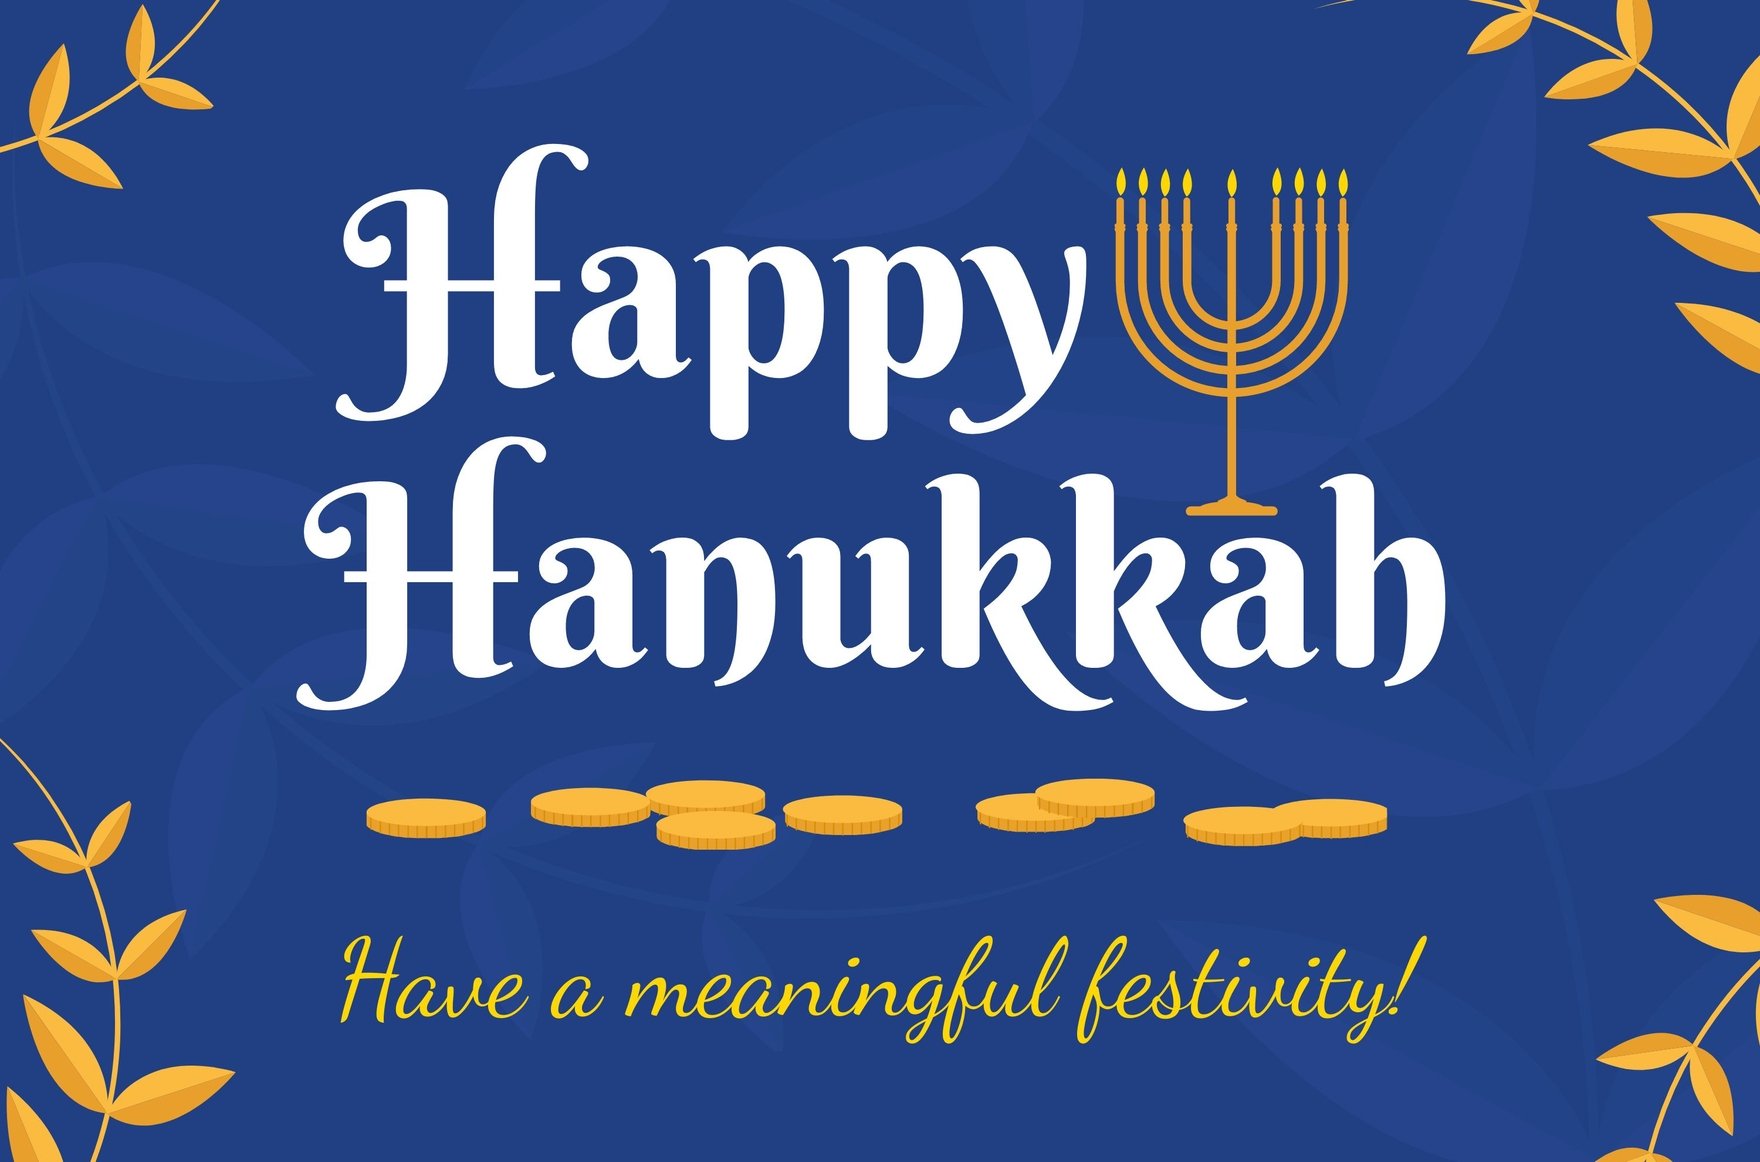 Free Hanukkah Banner in Illustrator, PSD, EPS, SVG, JPG, PNG